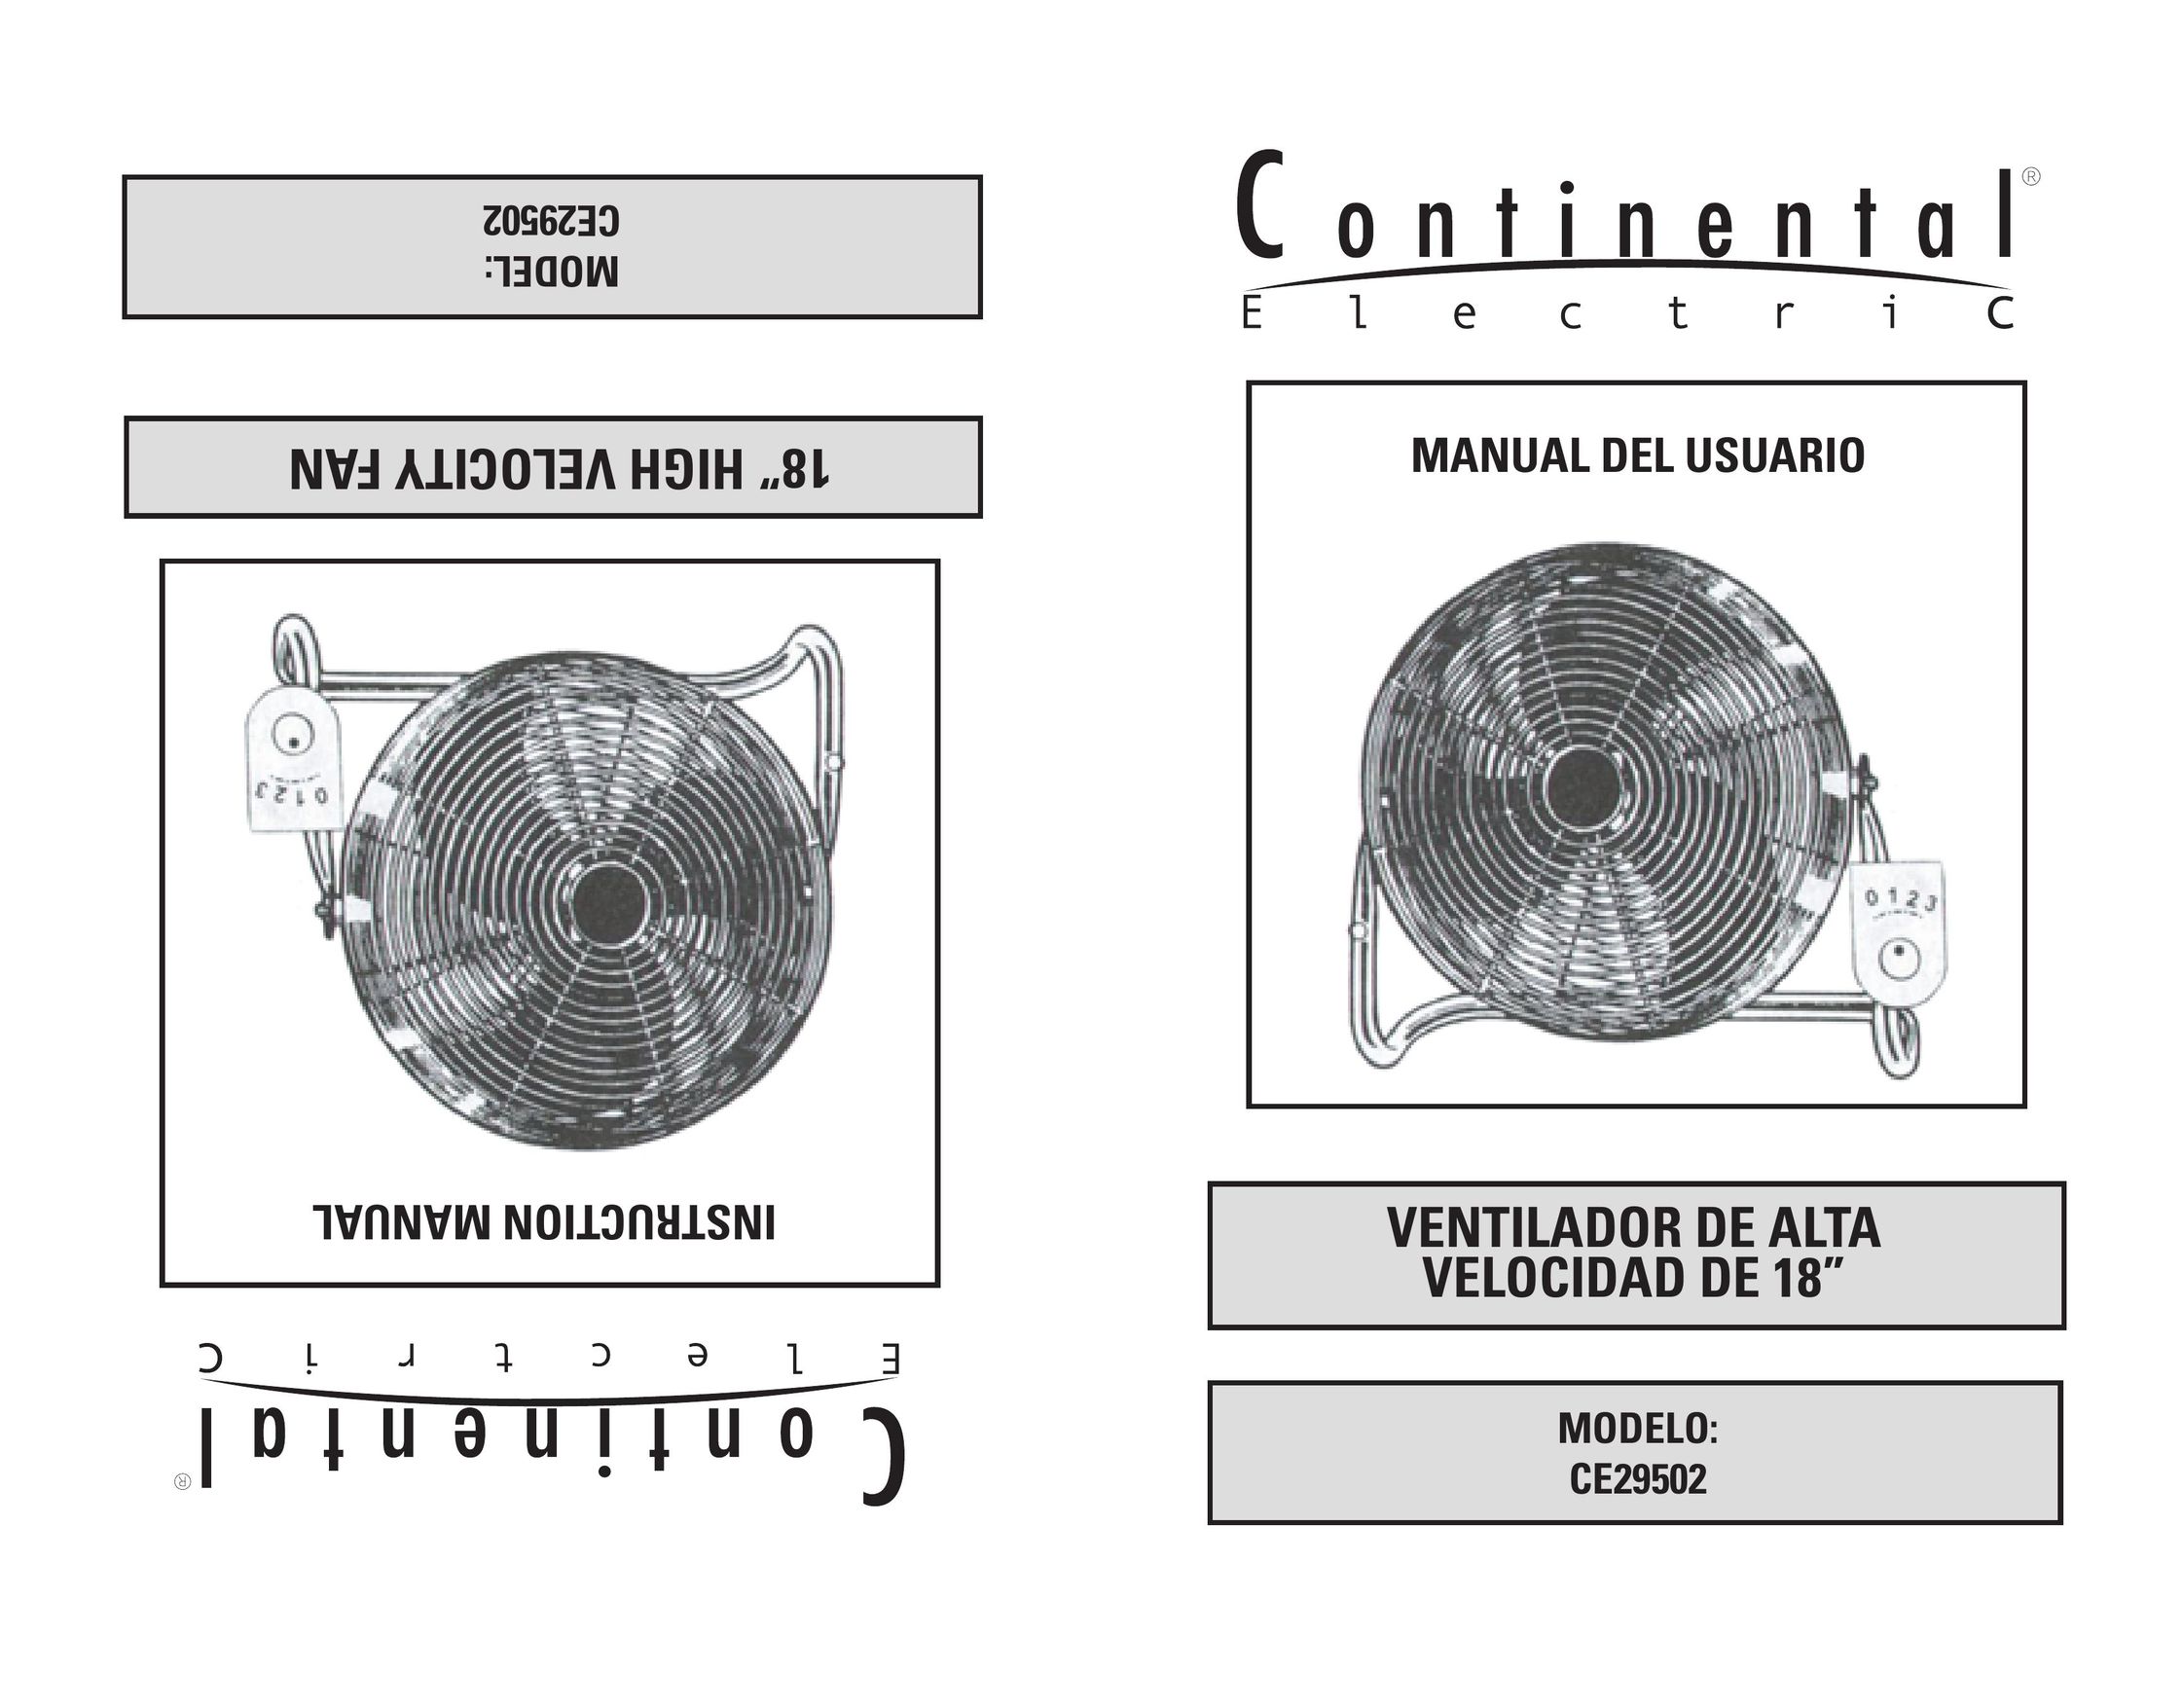 Continental Electric CE29502 Fan User Manual